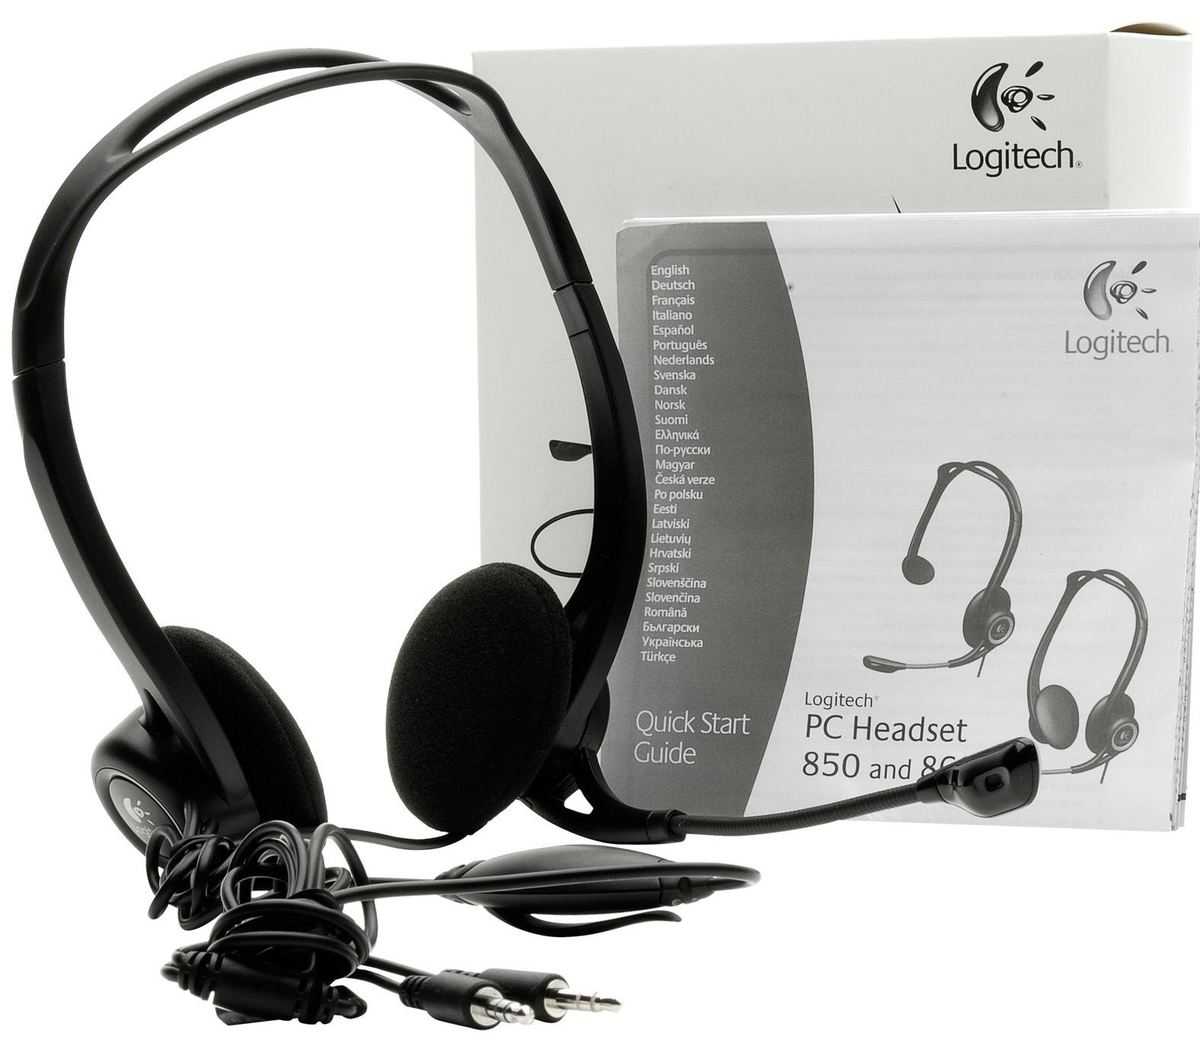 Logitech pc headset 860